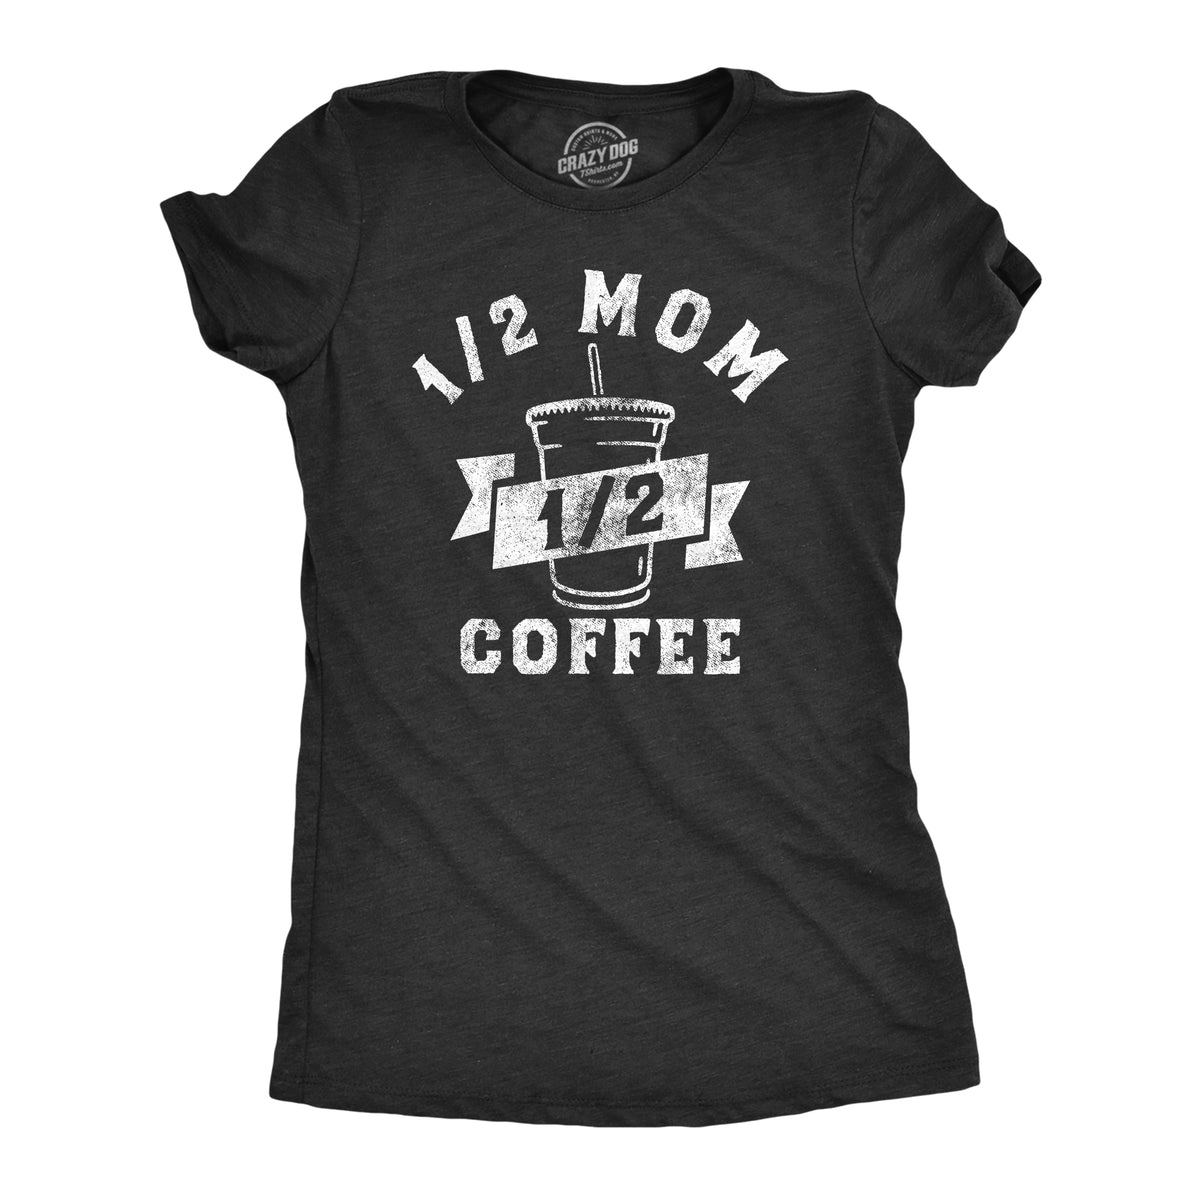 Funny Heather Black - Half Mom One Half Mom One Half Coffee Womens T Shirt Nerdy Mother&#39;s Day Coffee Tee